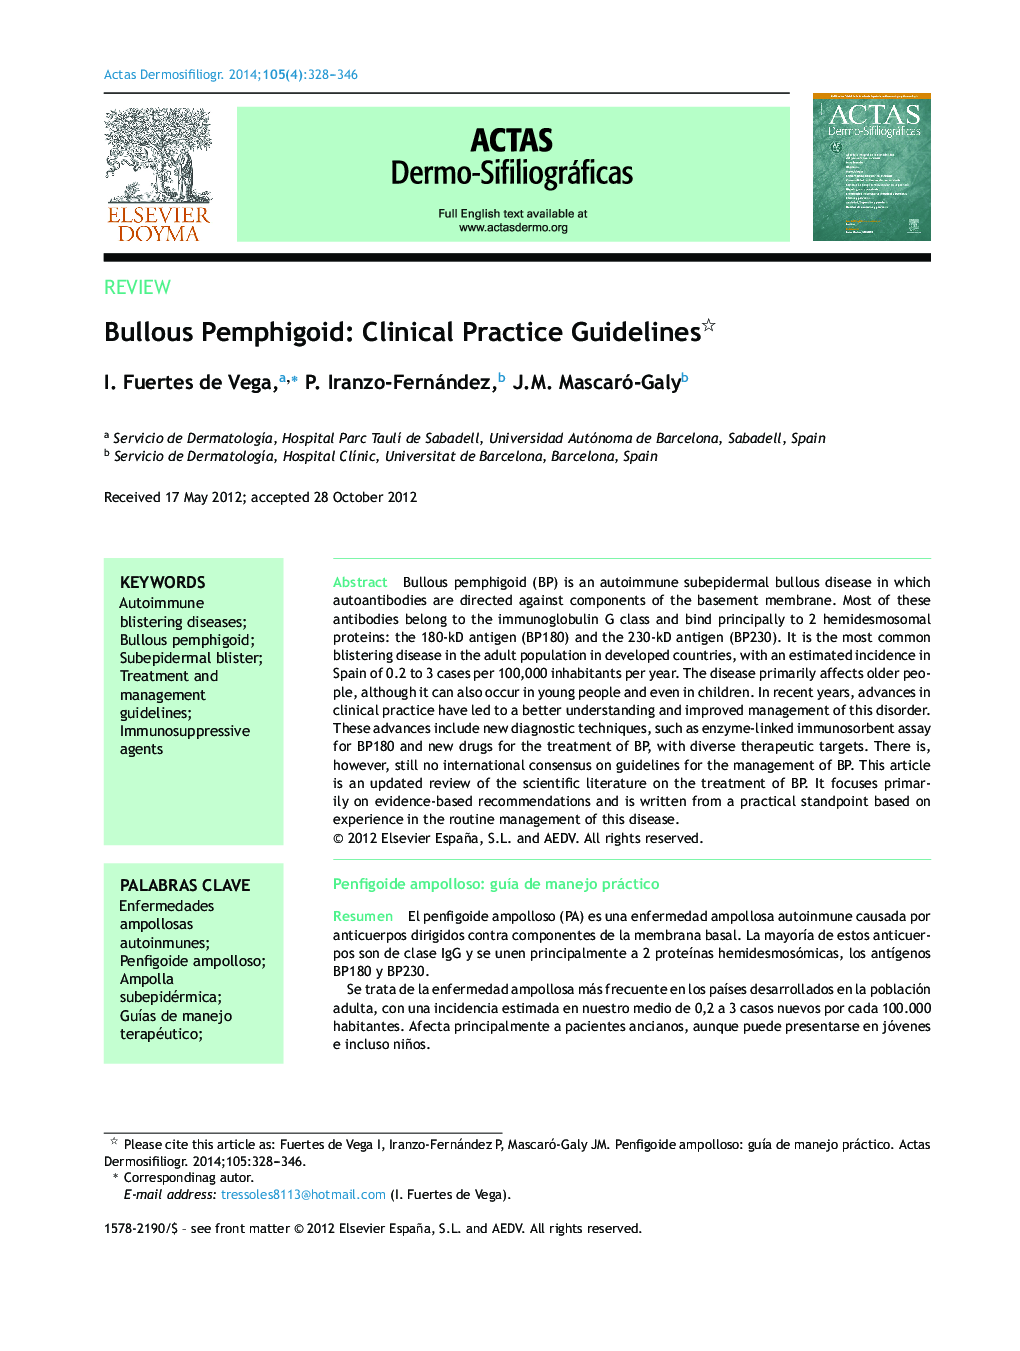 Bullous Pemphigoid: Clinical Practice Guidelines 